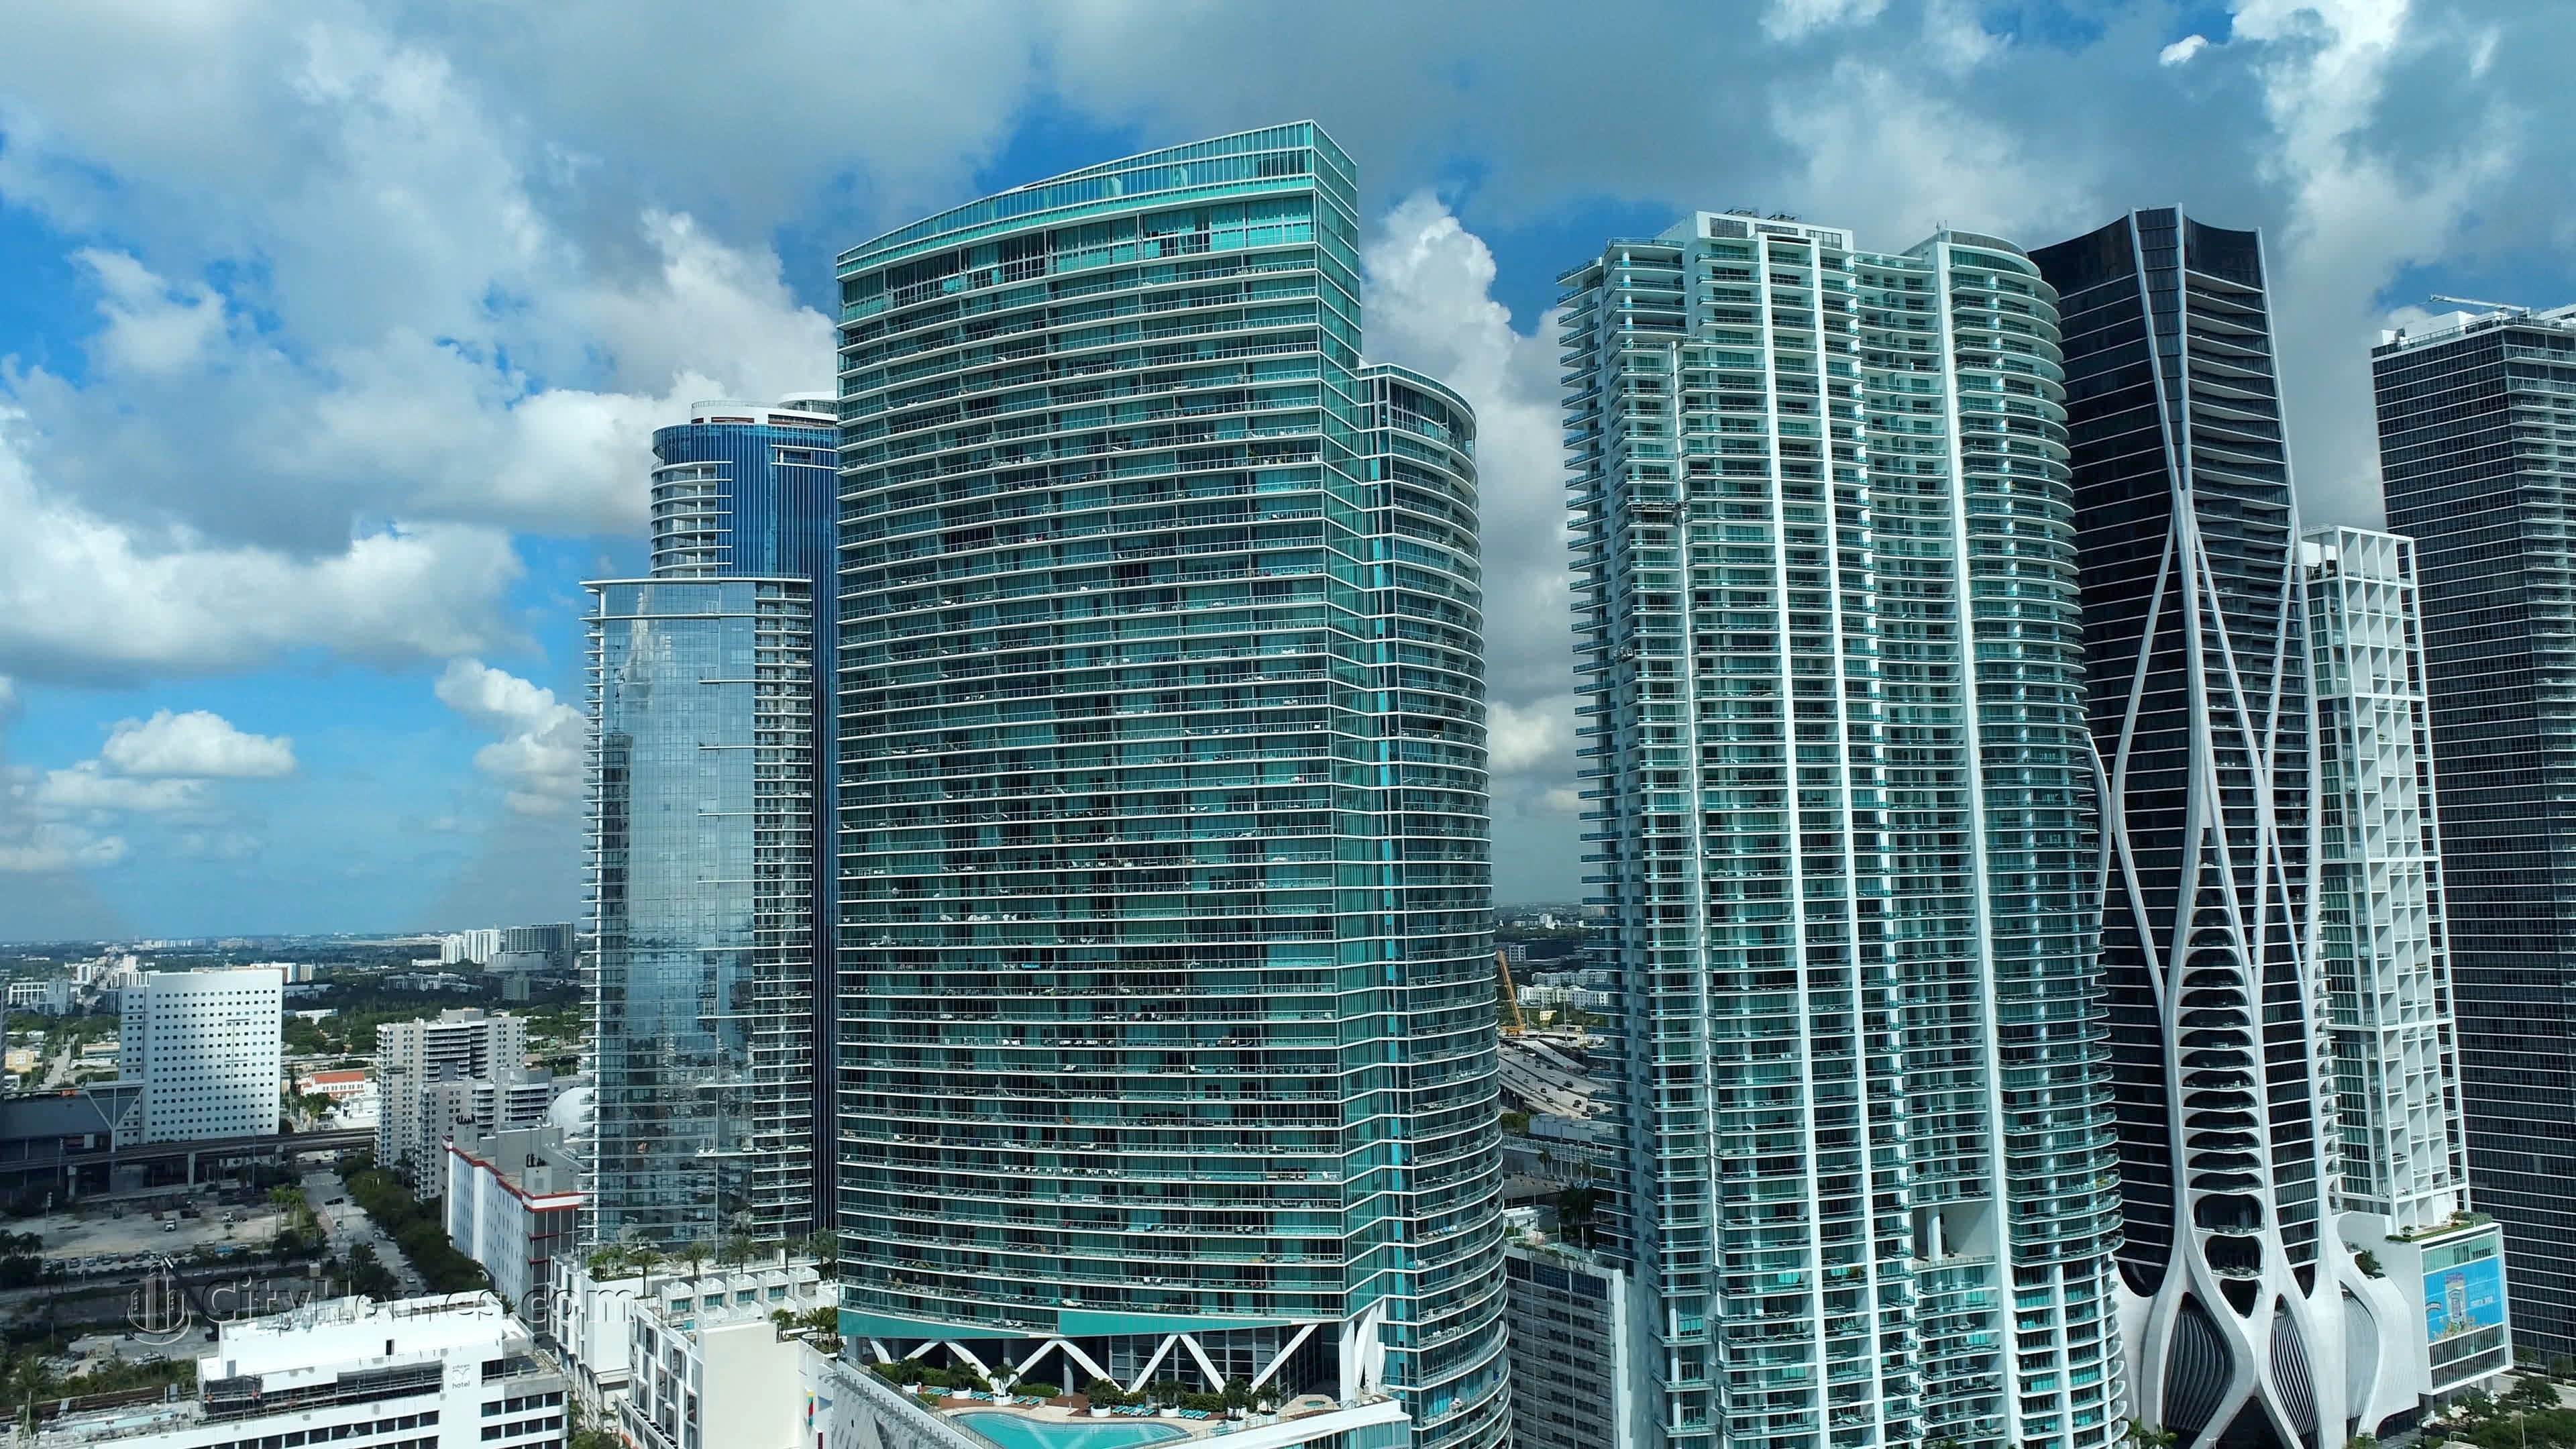 3. Marina Blue building at 888 Biscayne Blvd, Miami, FL 33132